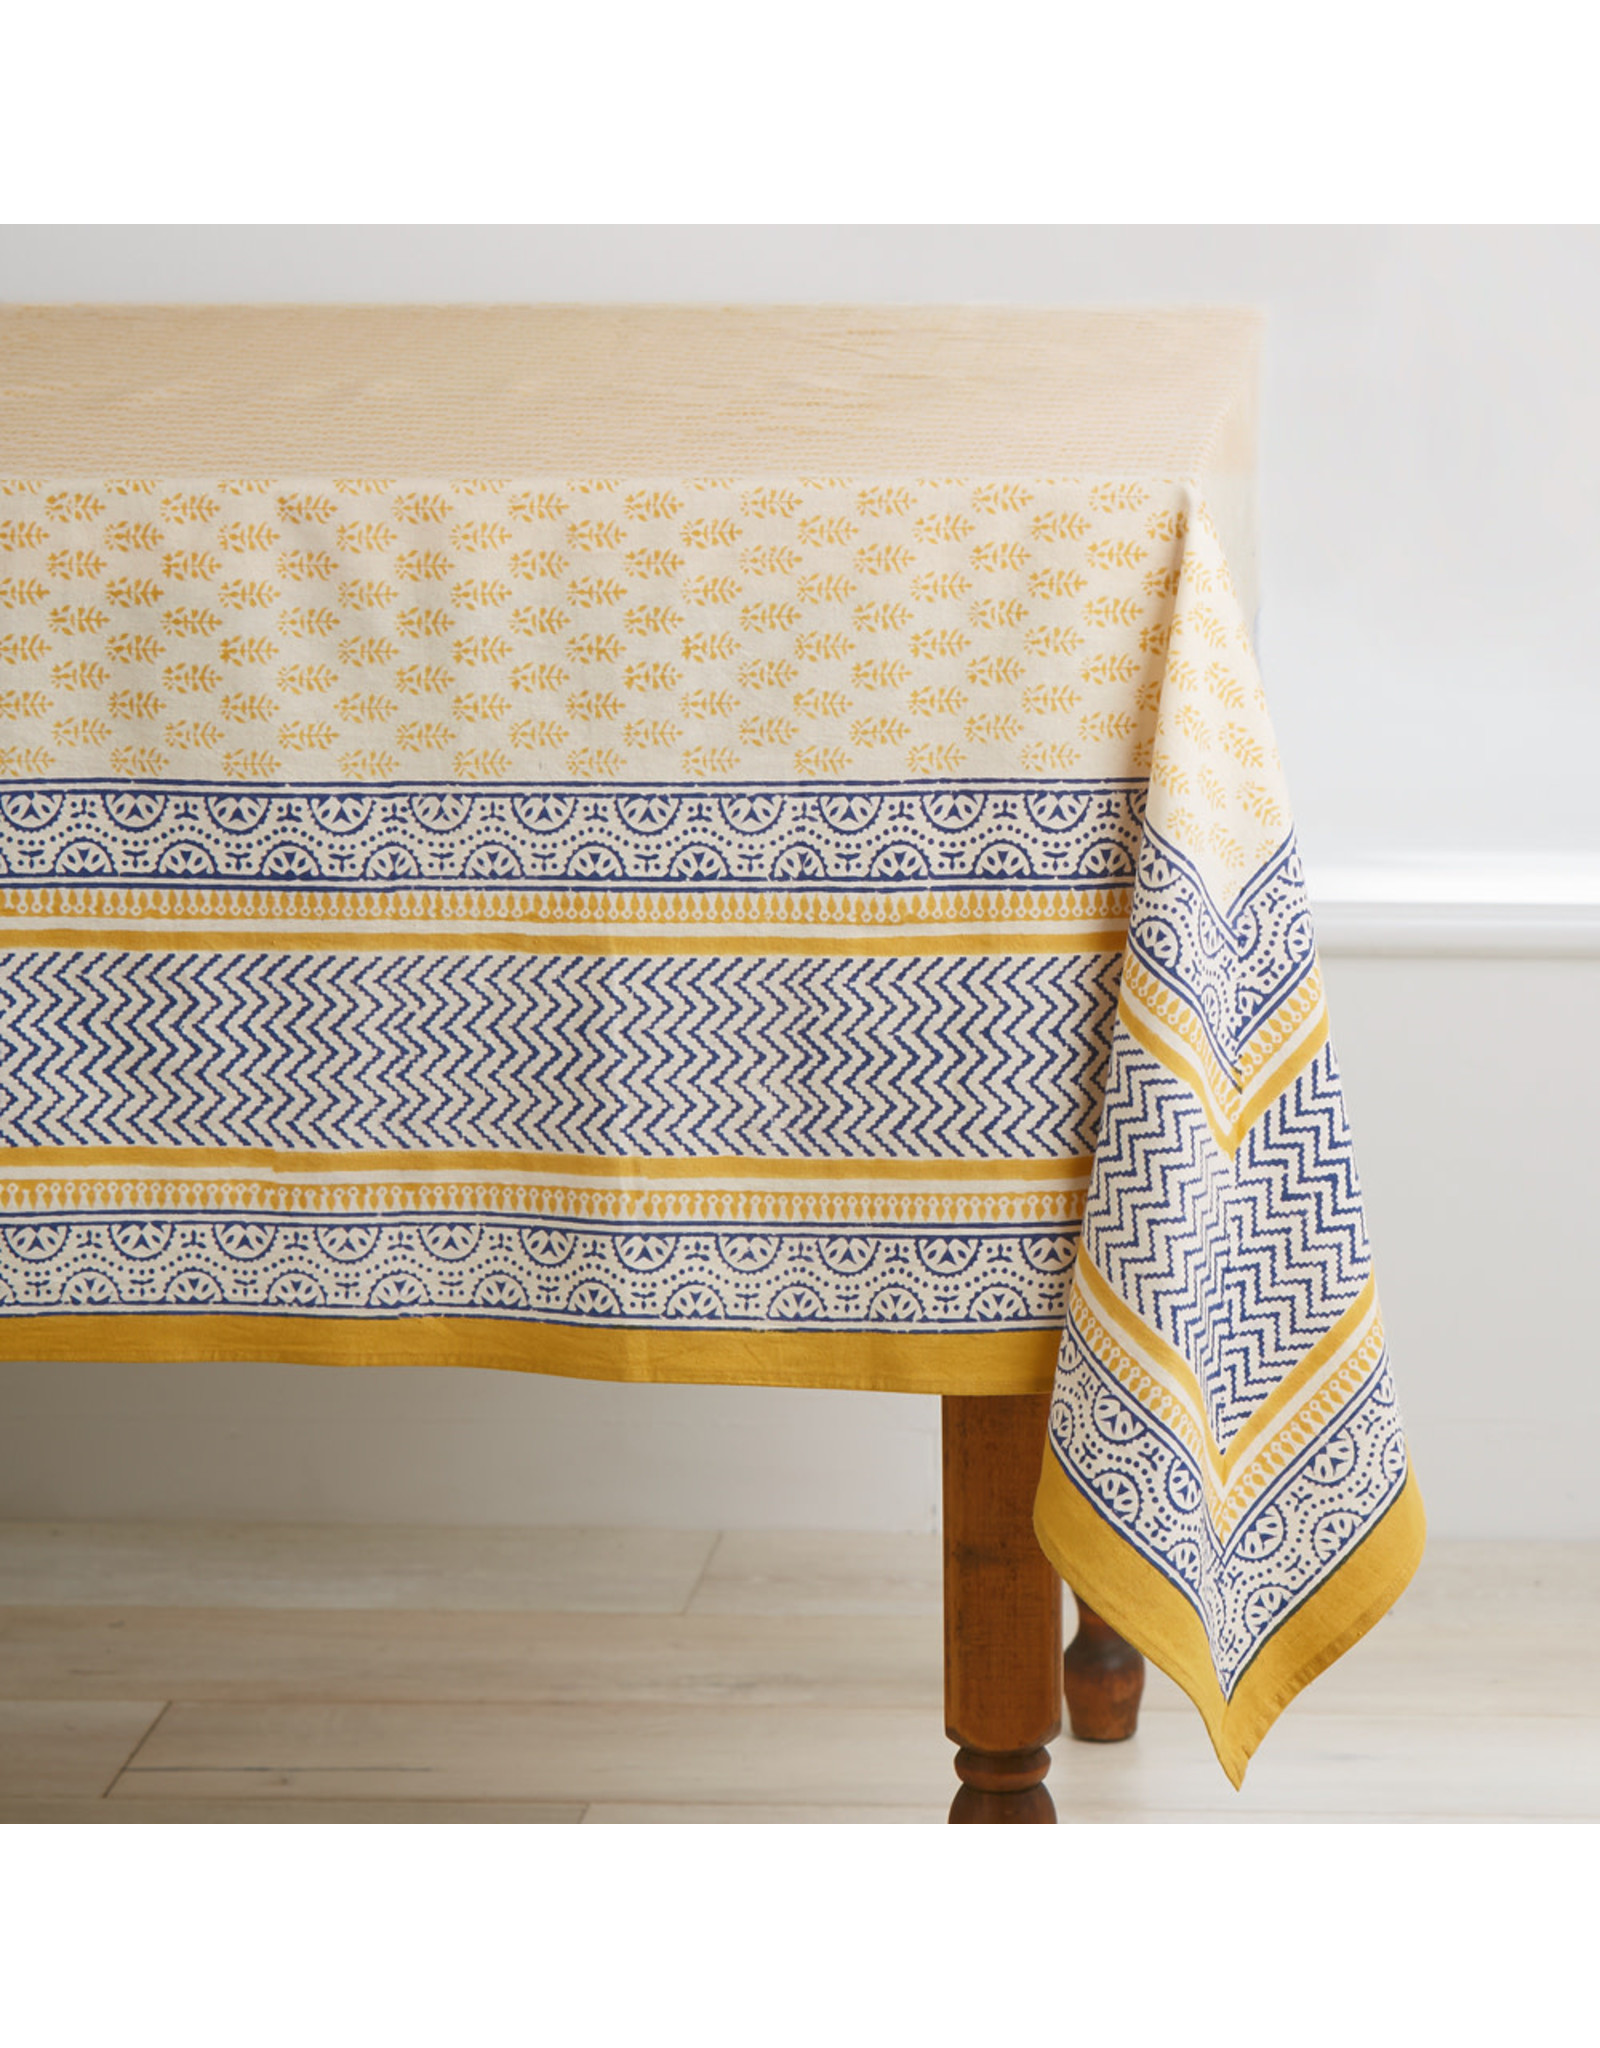 Sunny Sanganer Tablecloth, 60 x 90, India